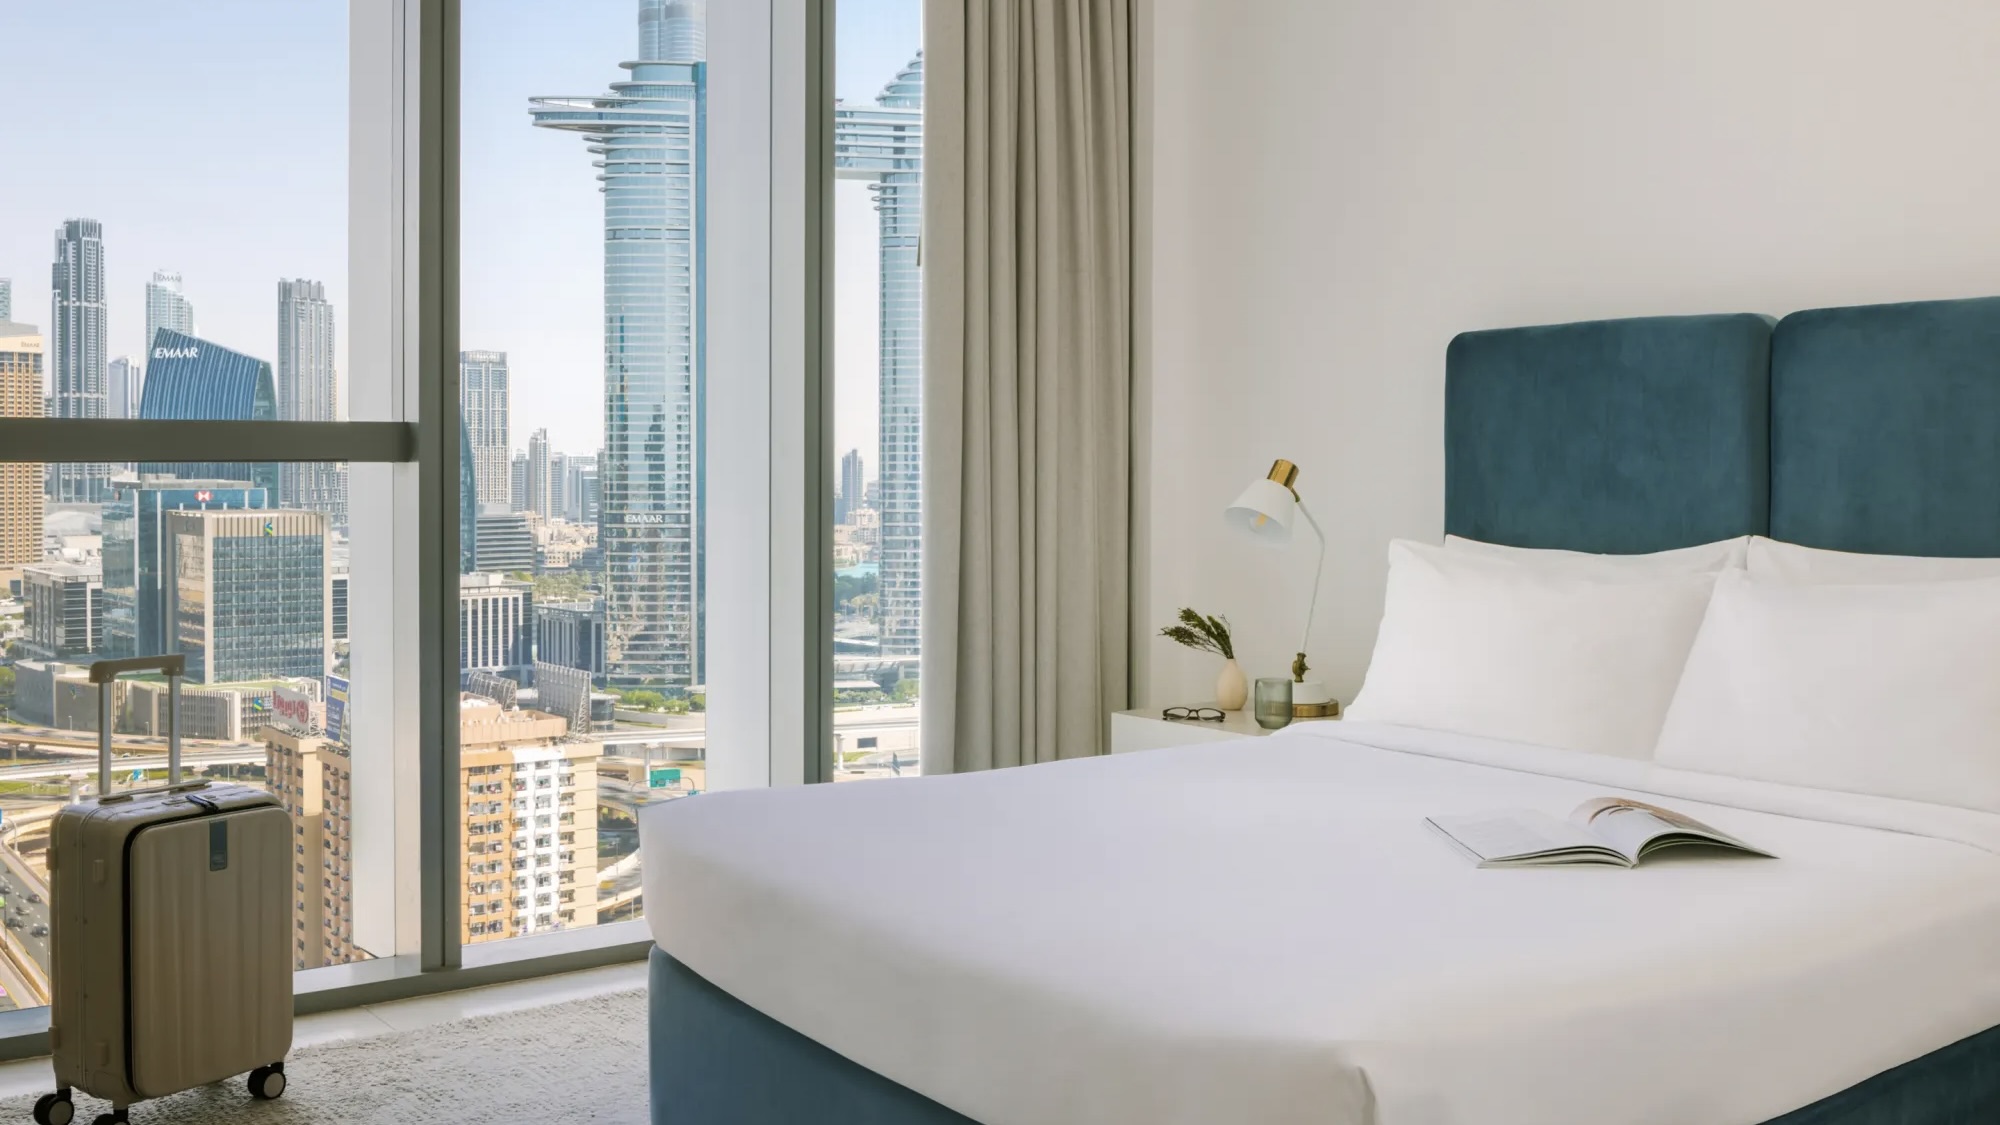 Sonder Downtown Towers Dubai is one of the best Sonder Dubai Hotels views